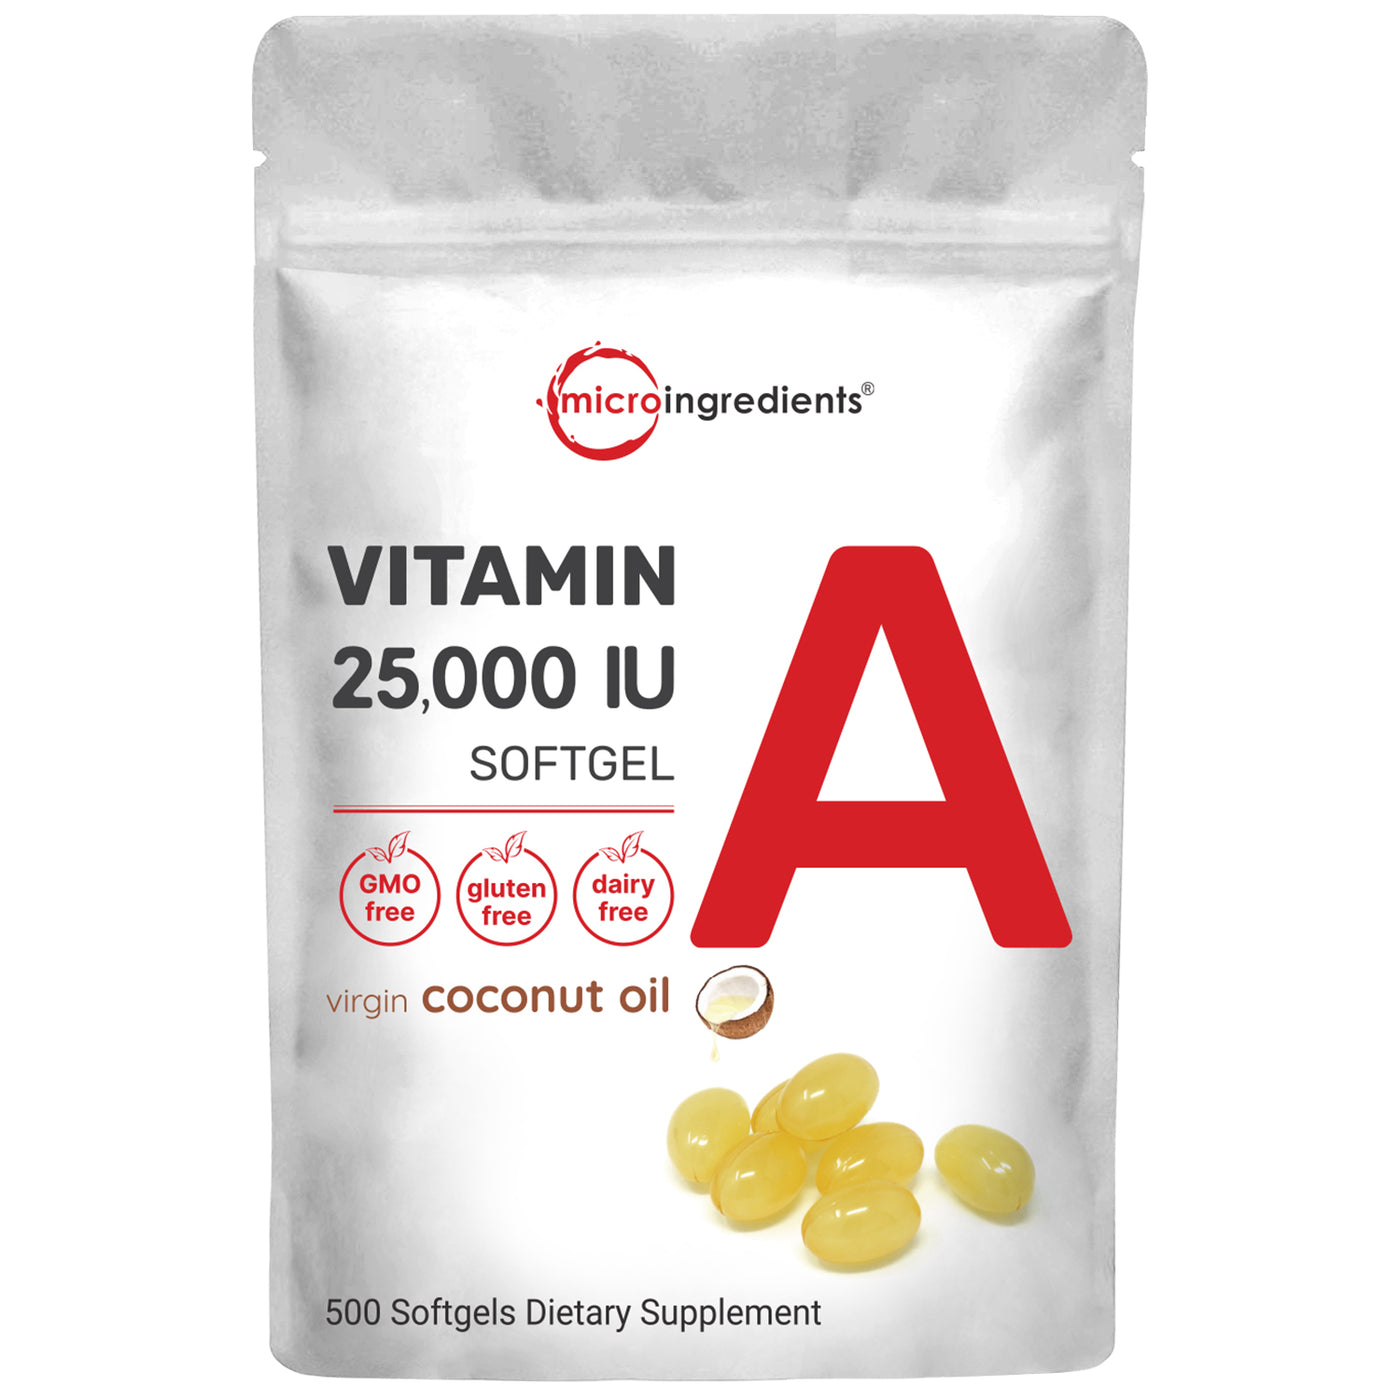 Vitamin A Softgels – 25,000 IU with Virgin Coconut Oil